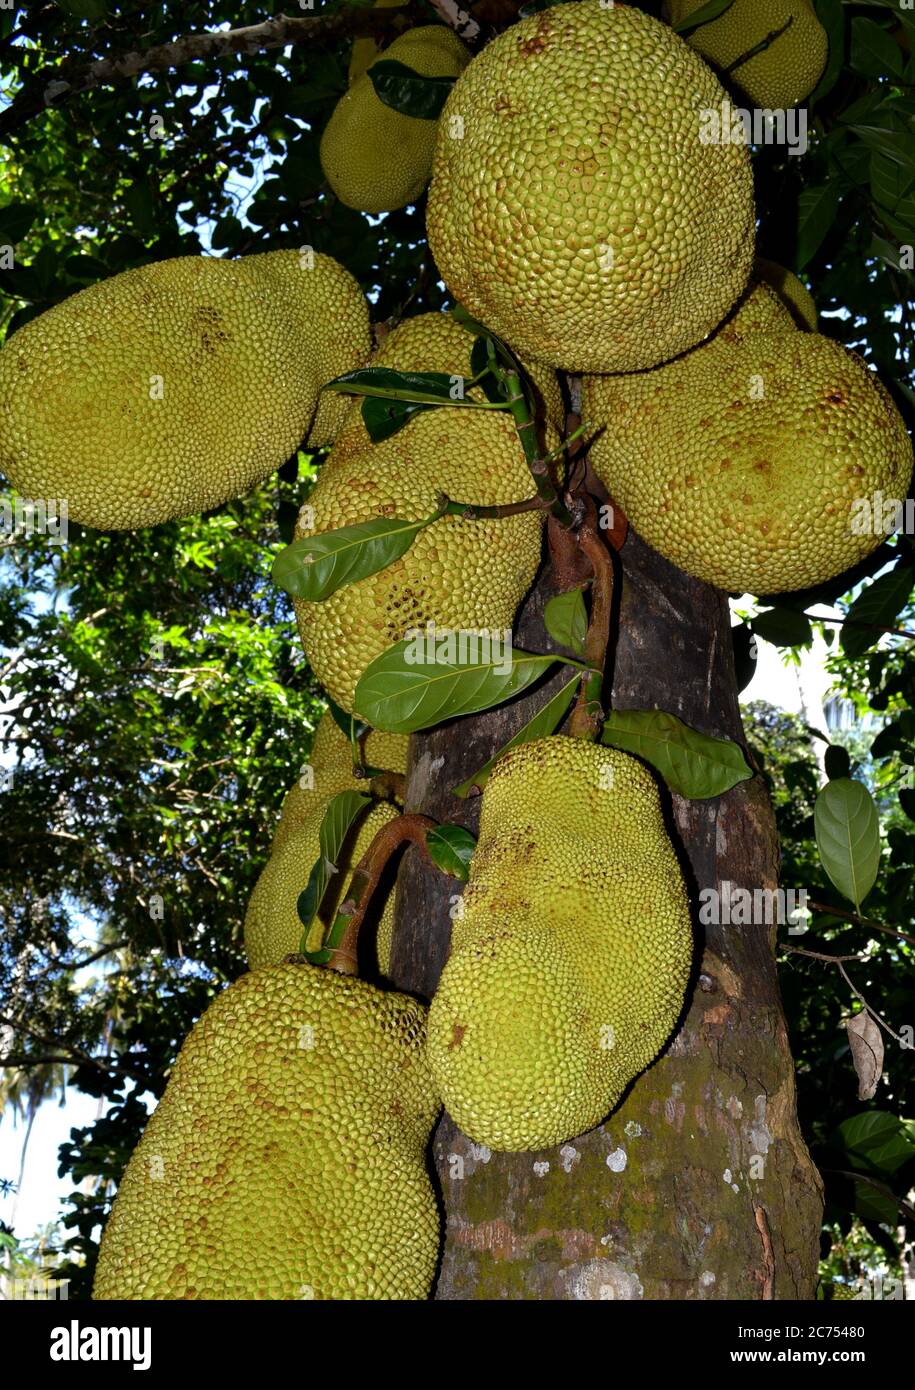 Giant jackfruit fruits on the trees in Zanzibar Stock Photo